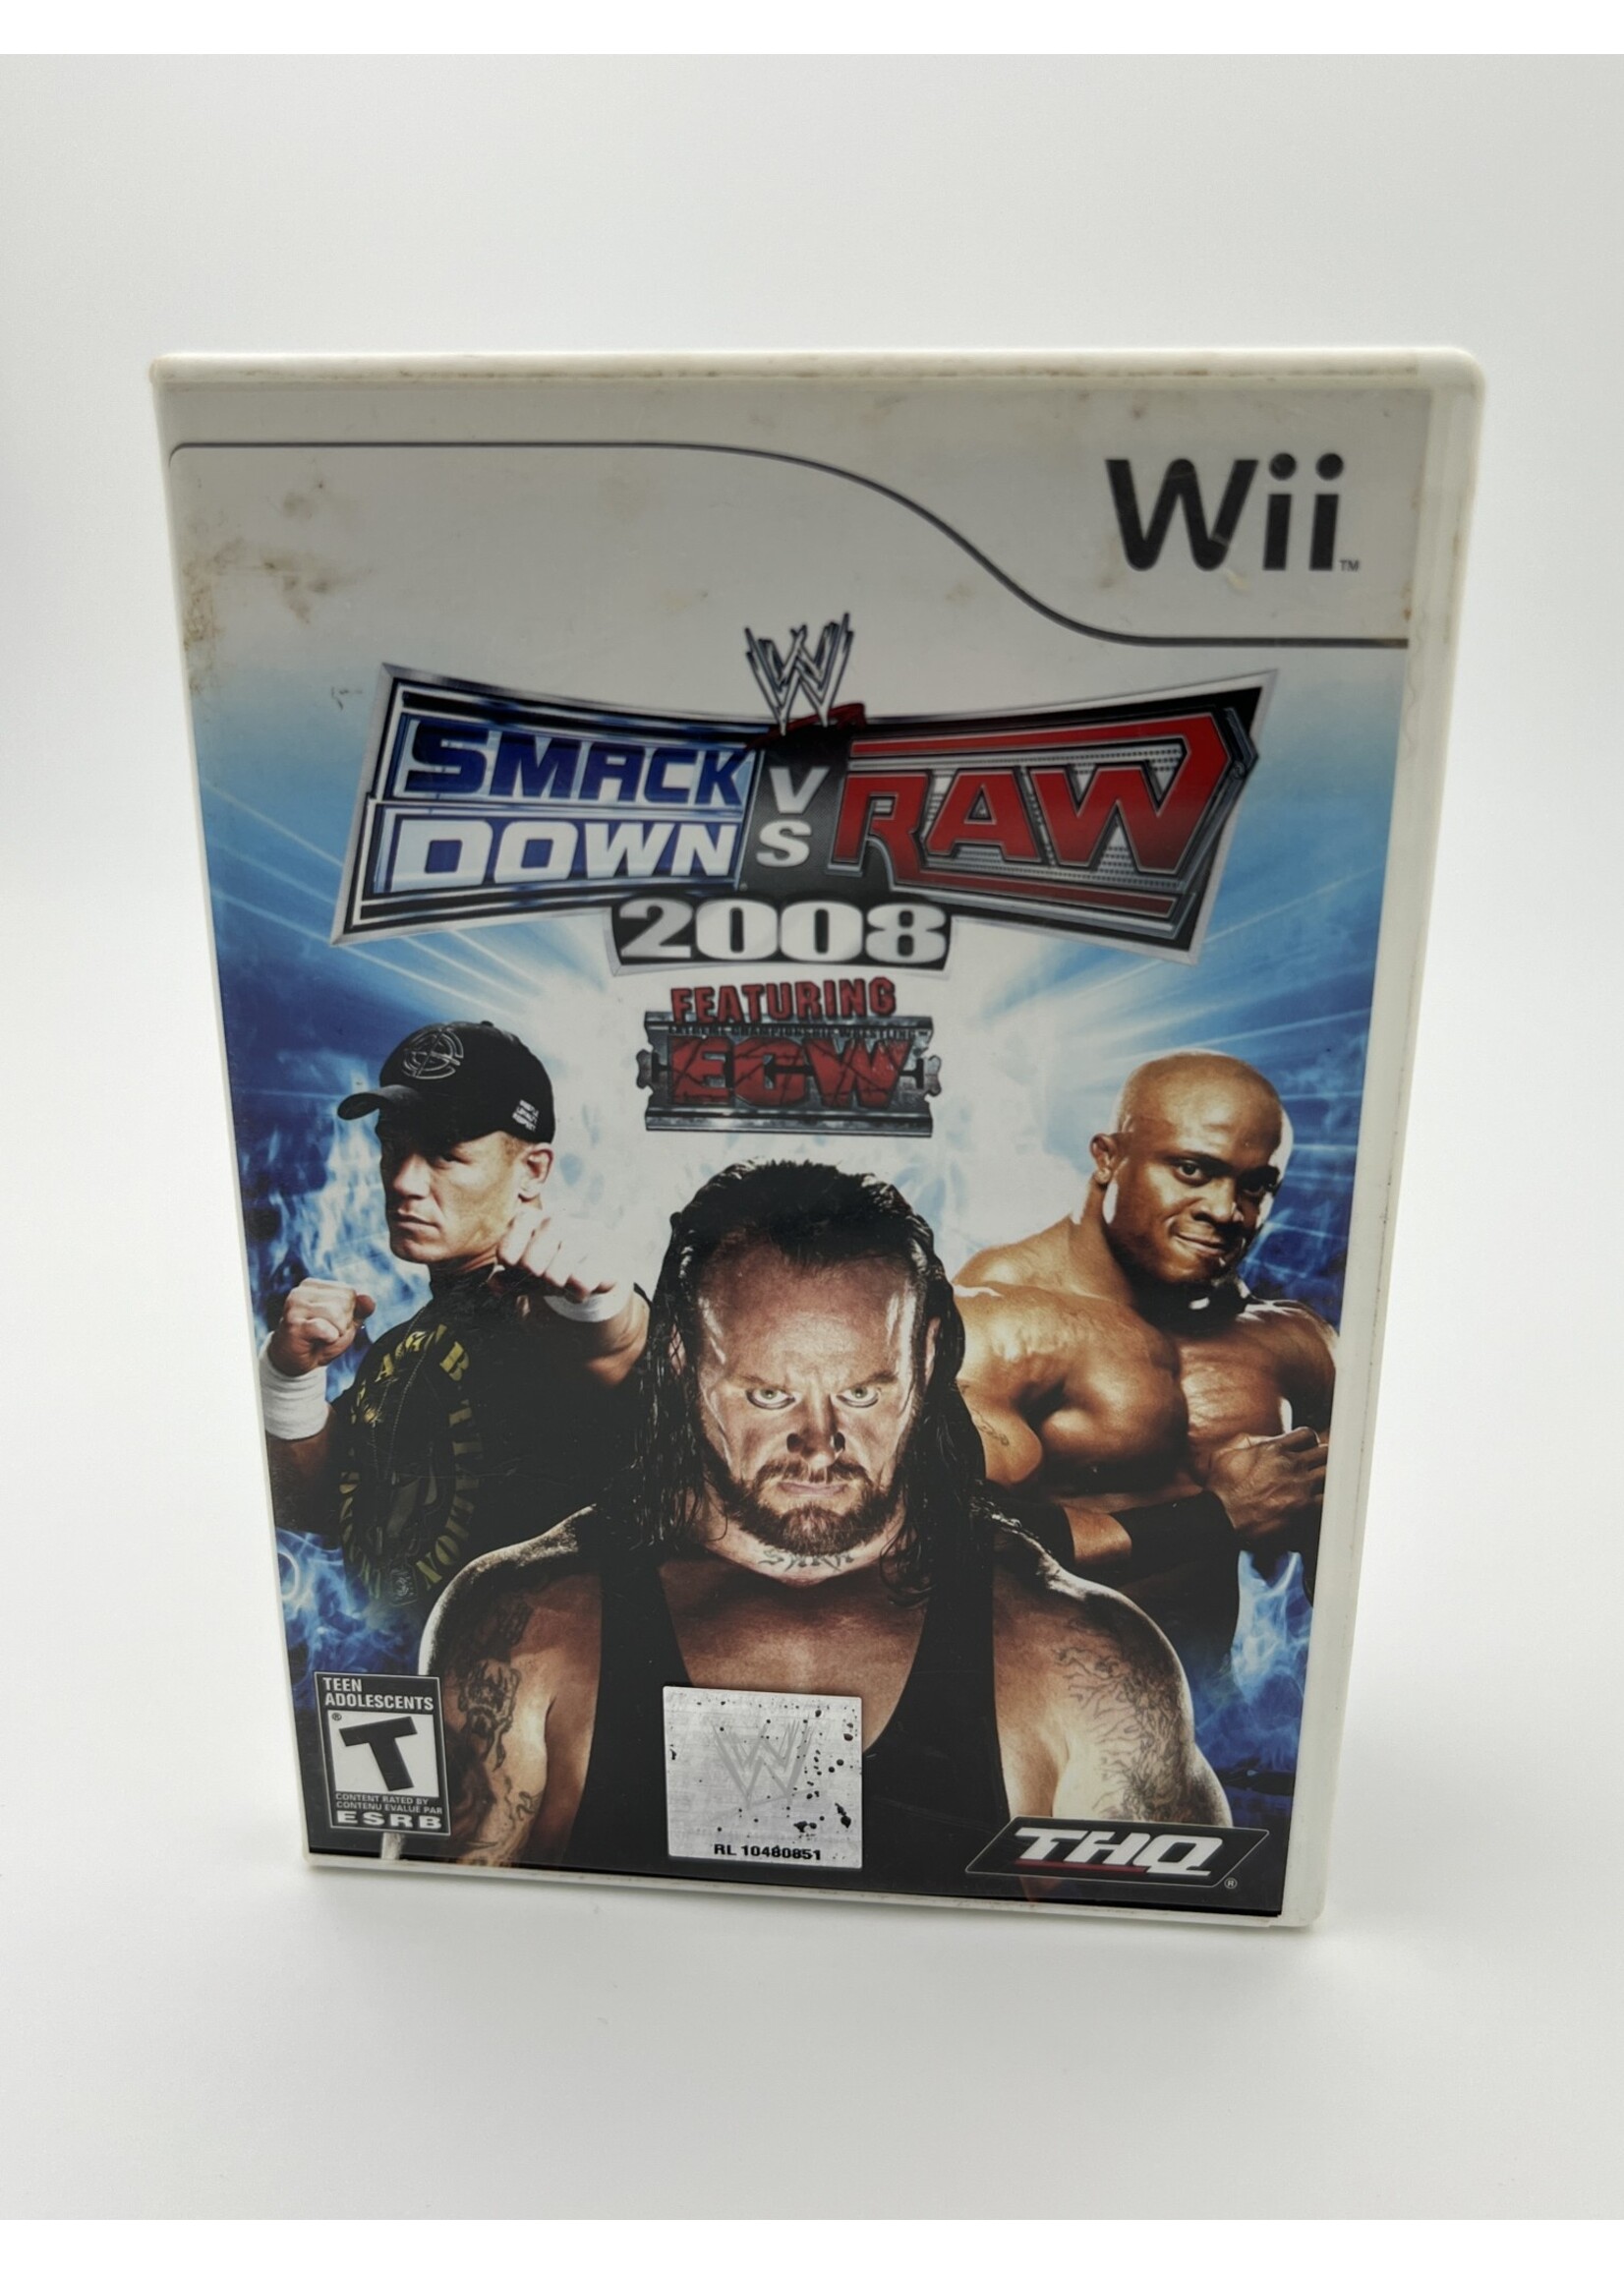 Nintendo   Smackdown VS Raw 2008 Featuring ECW Wii